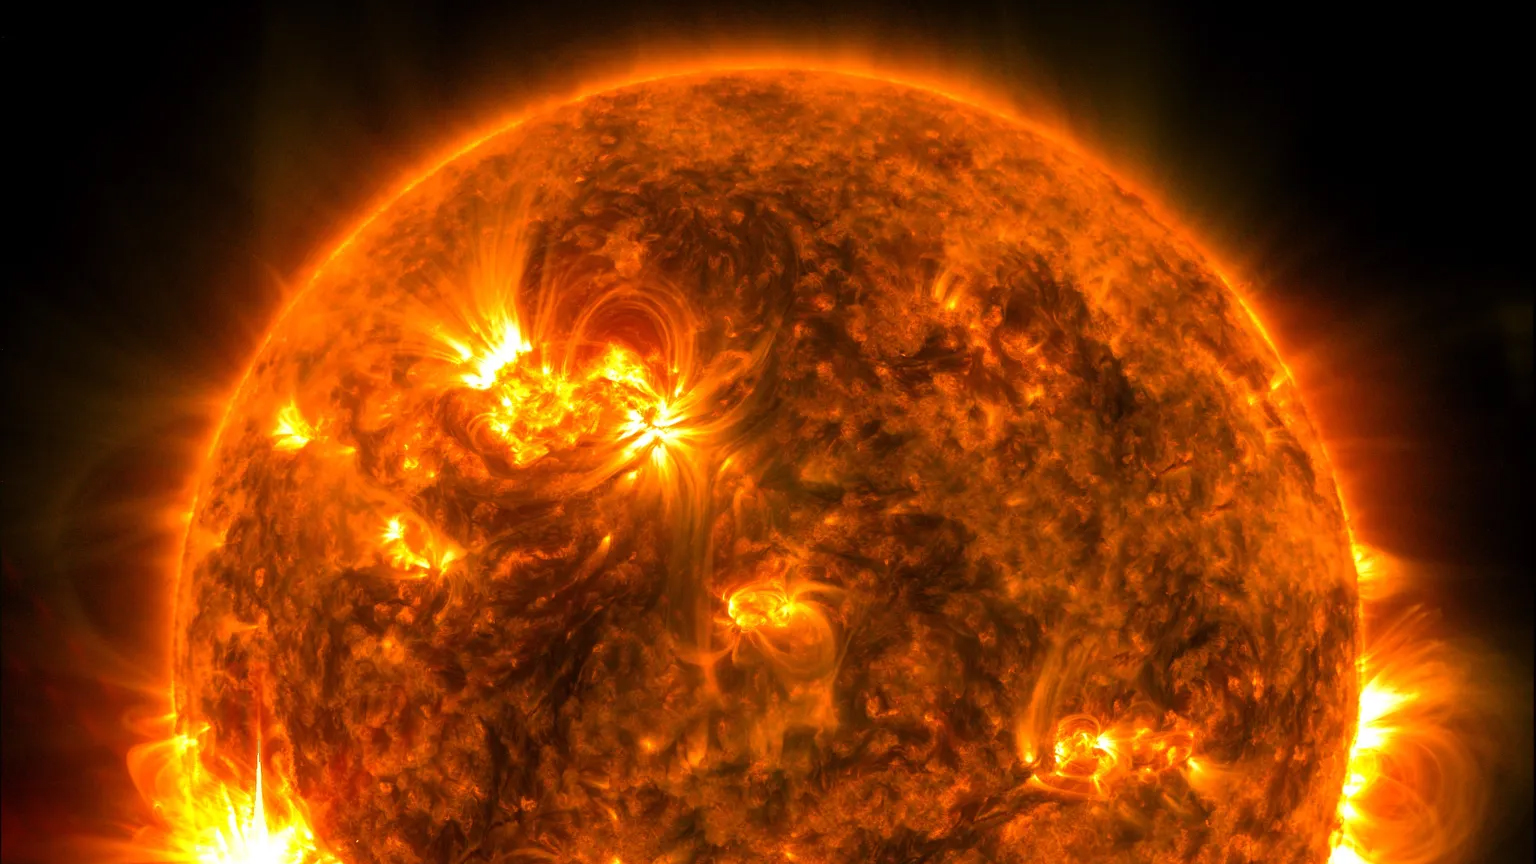 A NASA photo of the sun releasing a solar flare